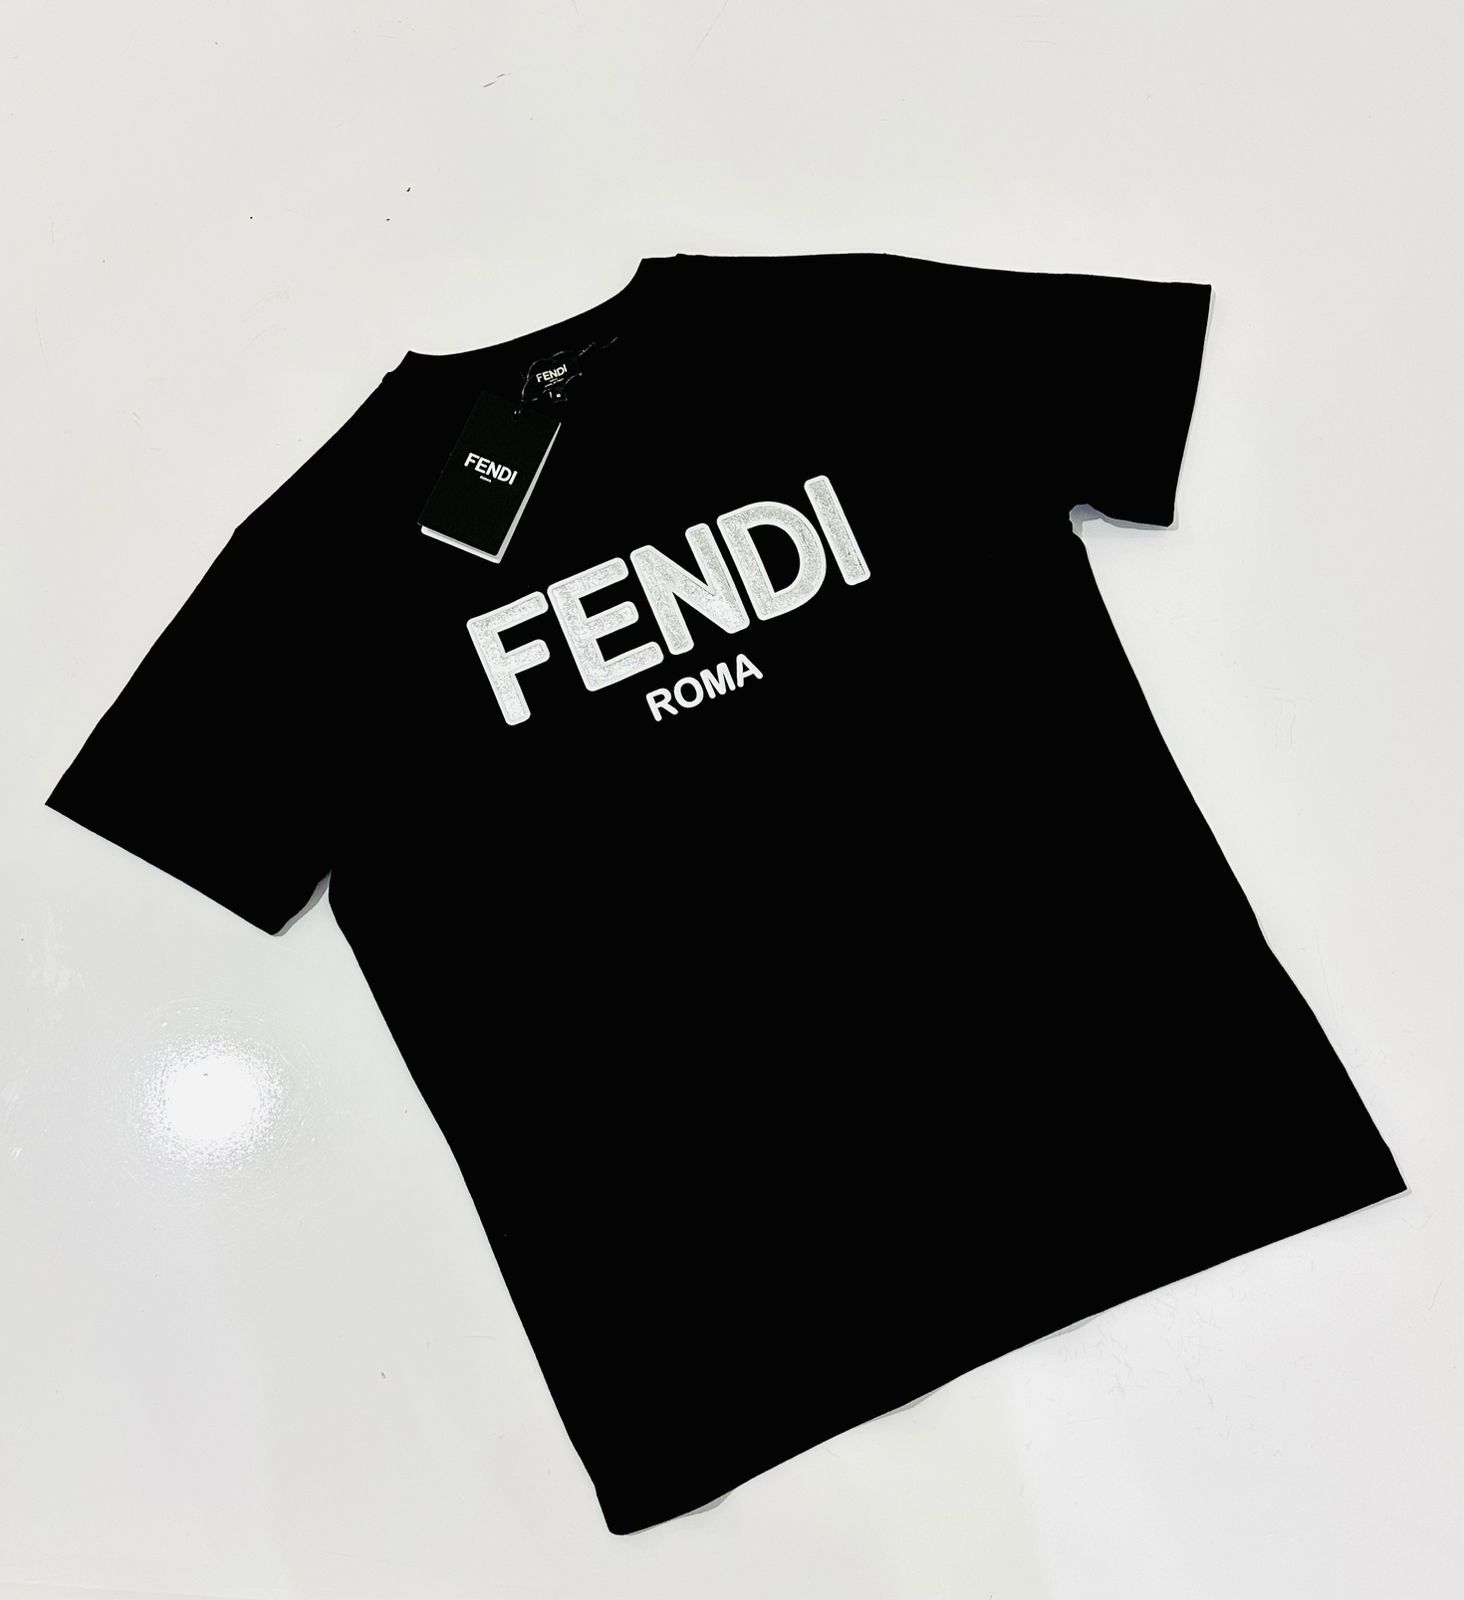 CAMISETA FENDI | SP GRIFES - Camisetas Importadas no Atacado